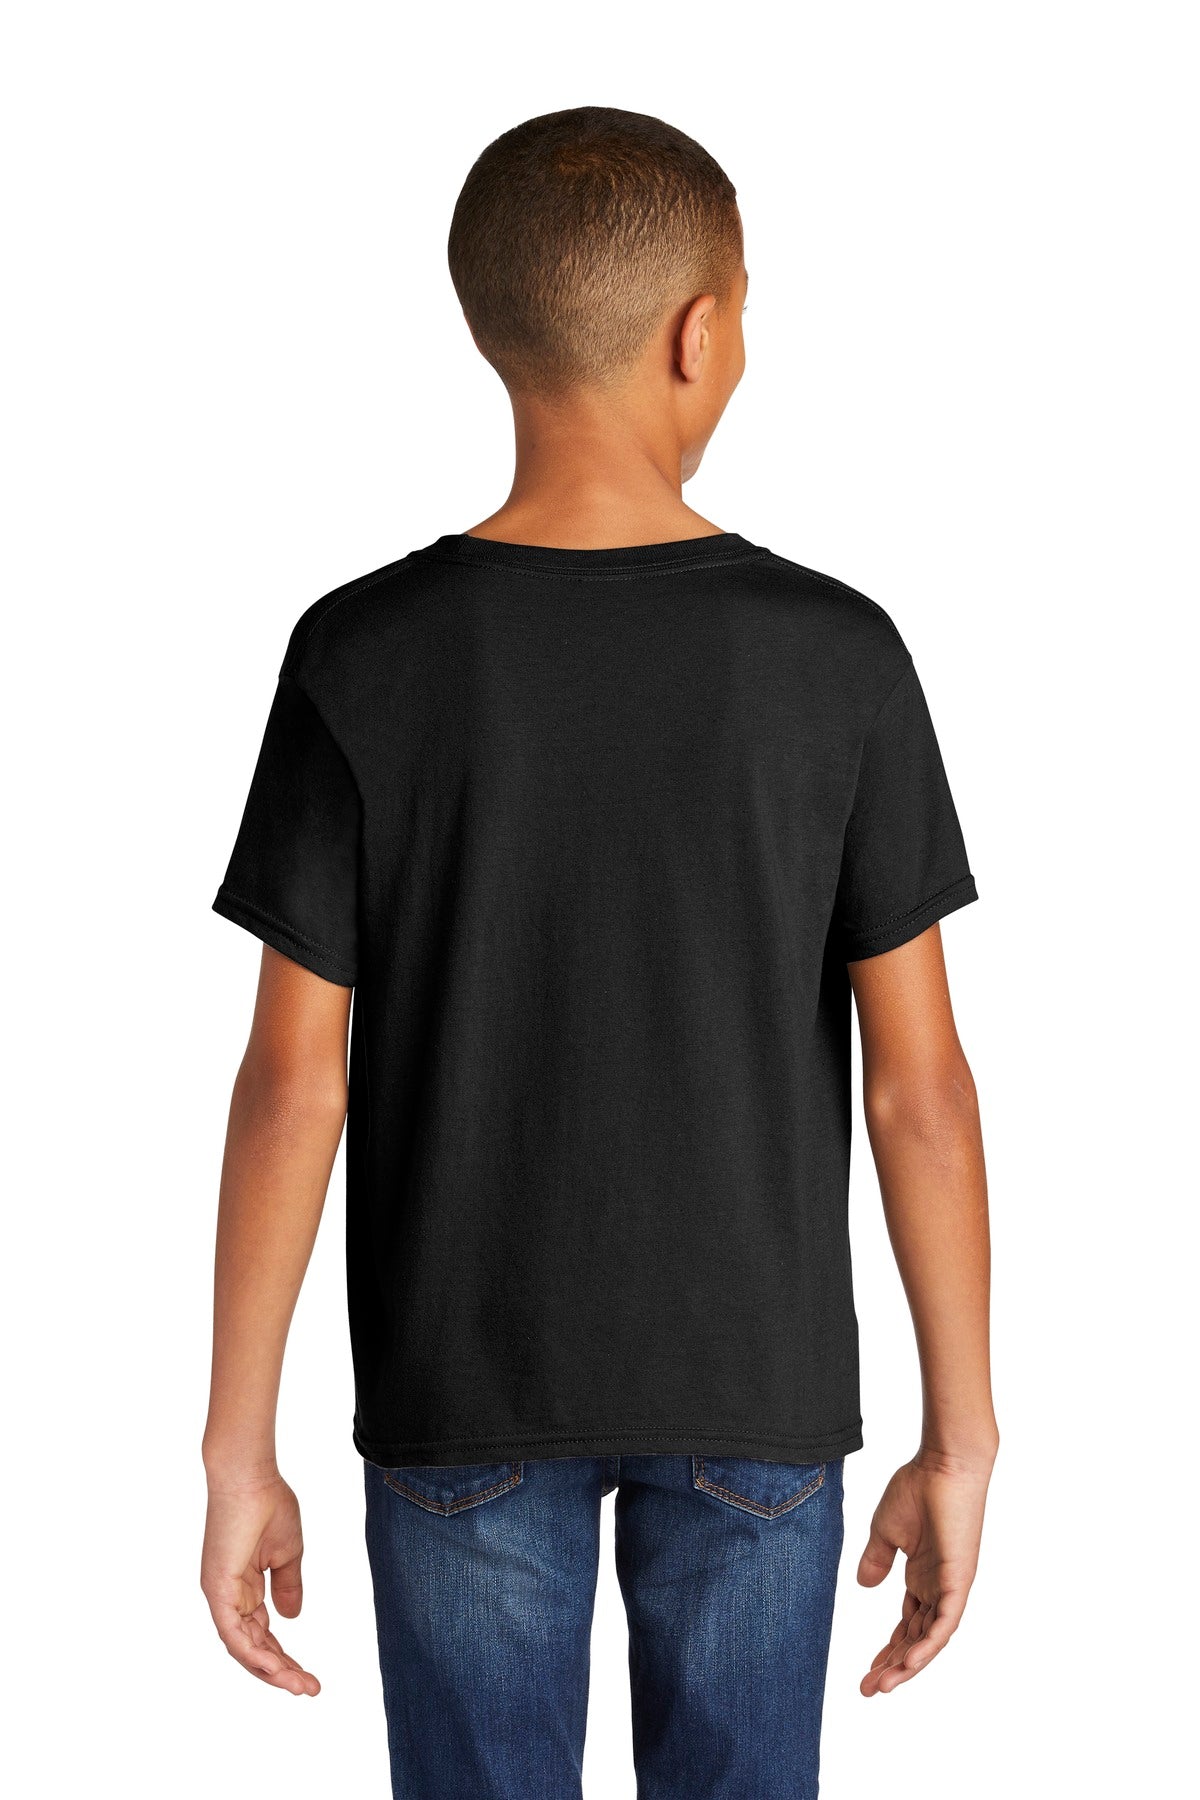 Gildan Youth Softstyle ® T-Shirt. 64500B - DFW Impression